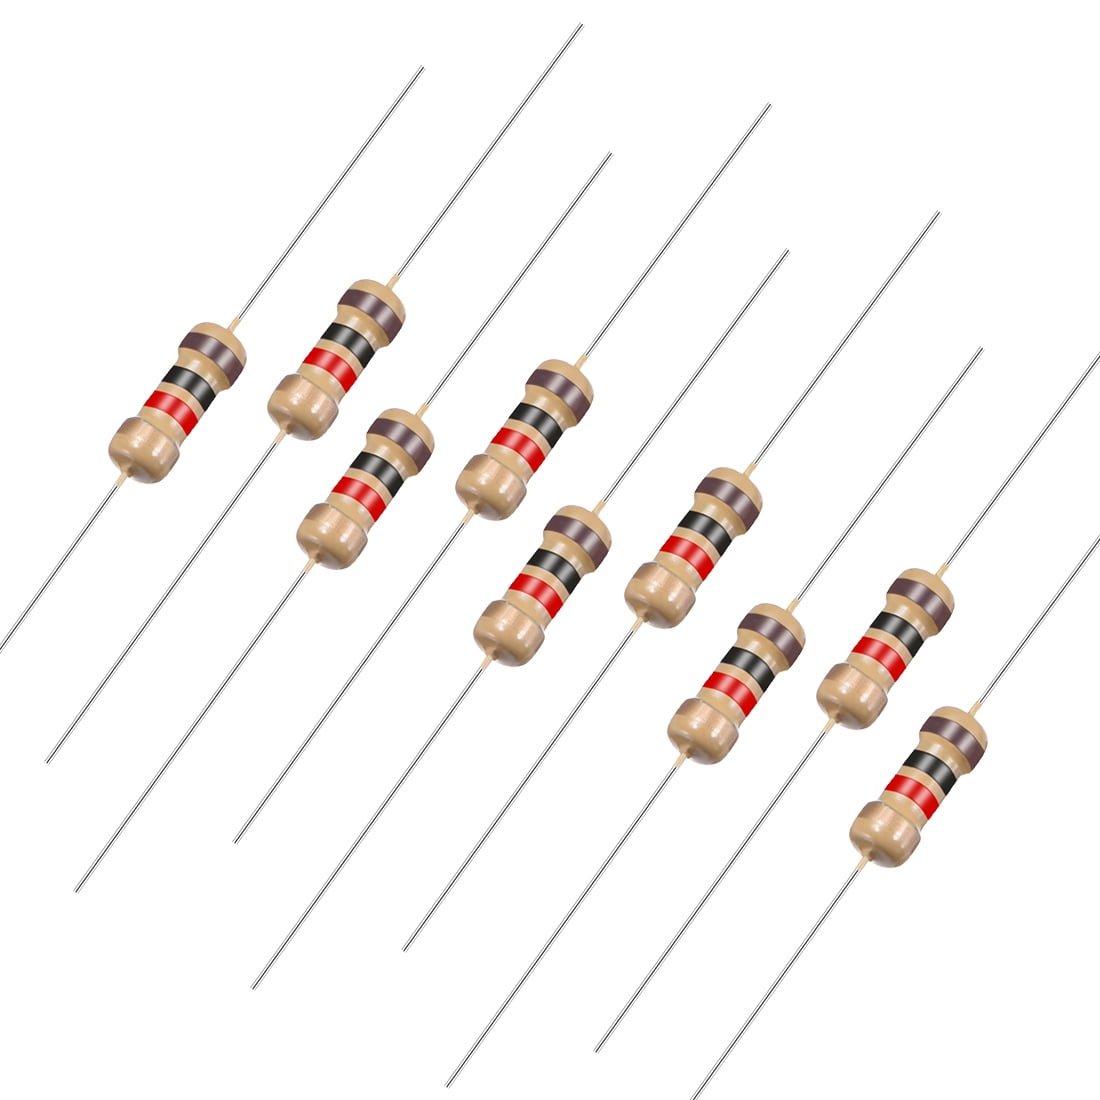 1 k ohm resistor color code